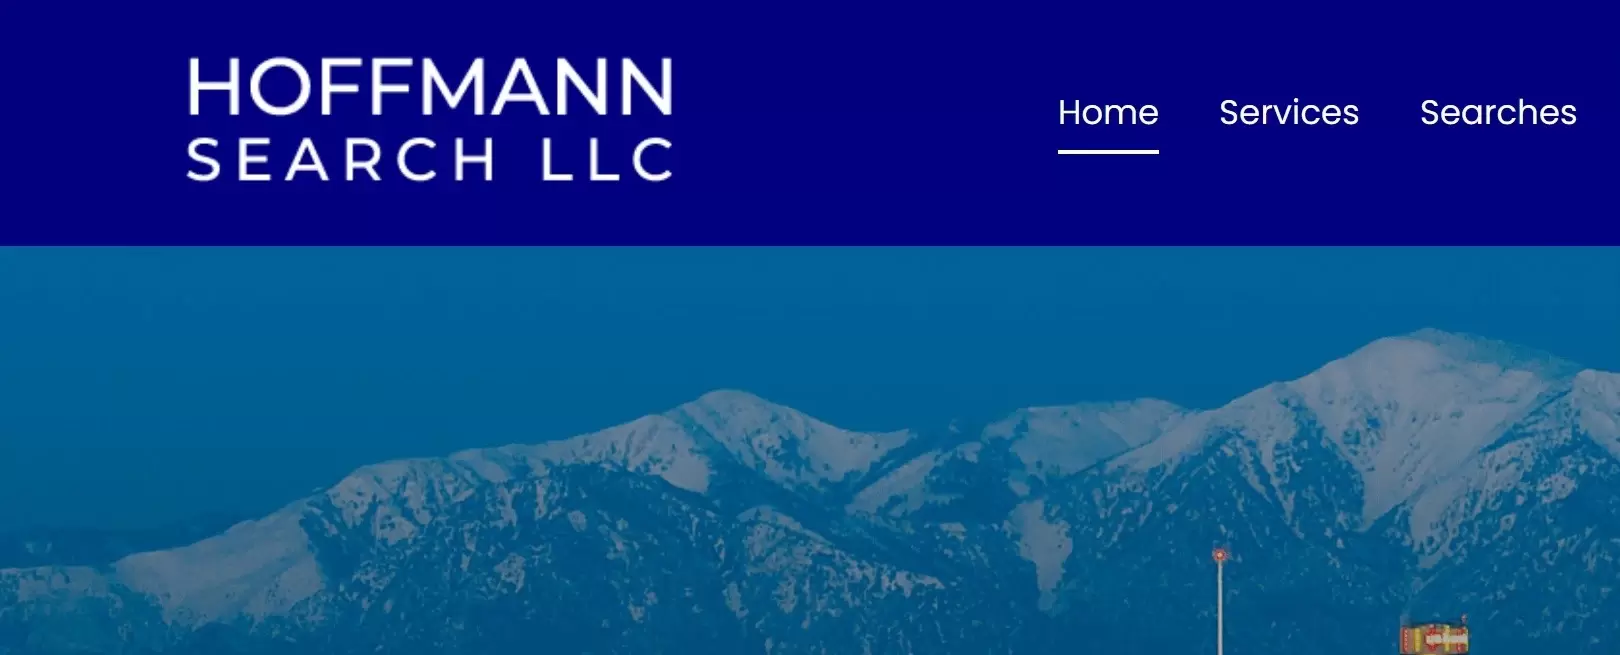 Hoffmann Search: Company Profile & Reviews